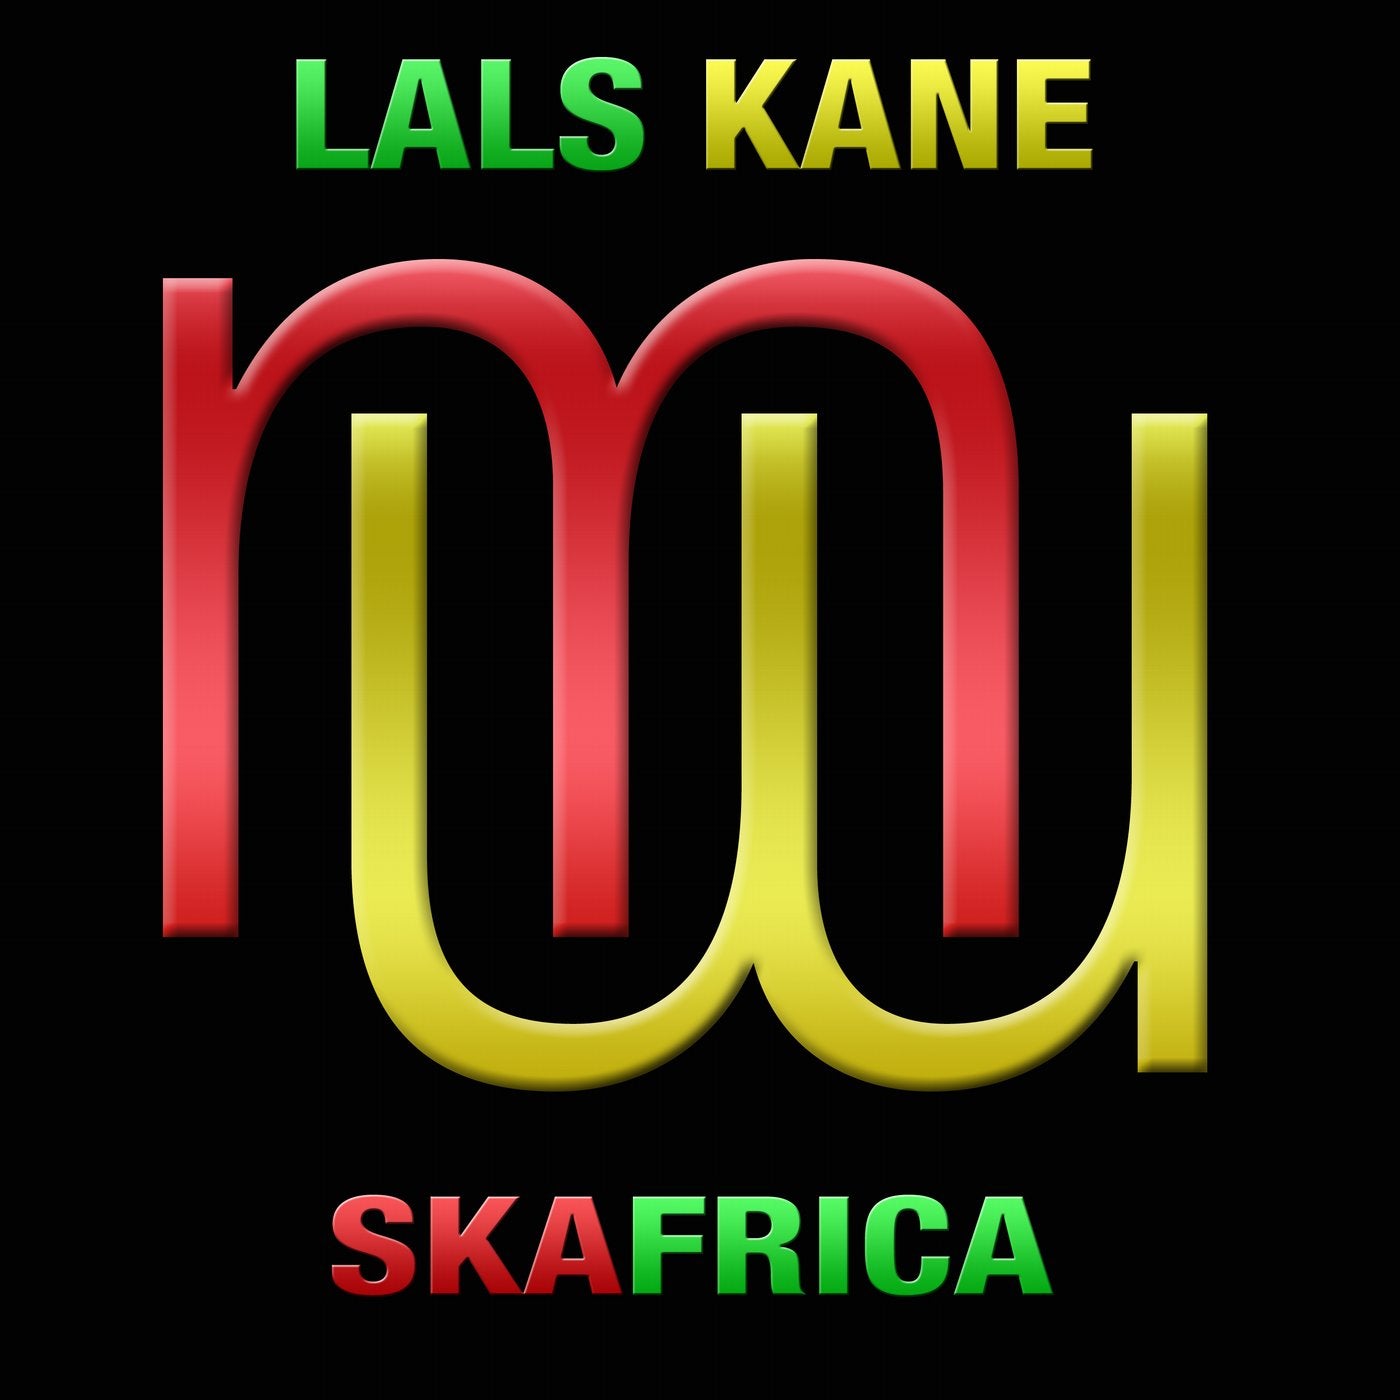 Lals Kane SKAfrica